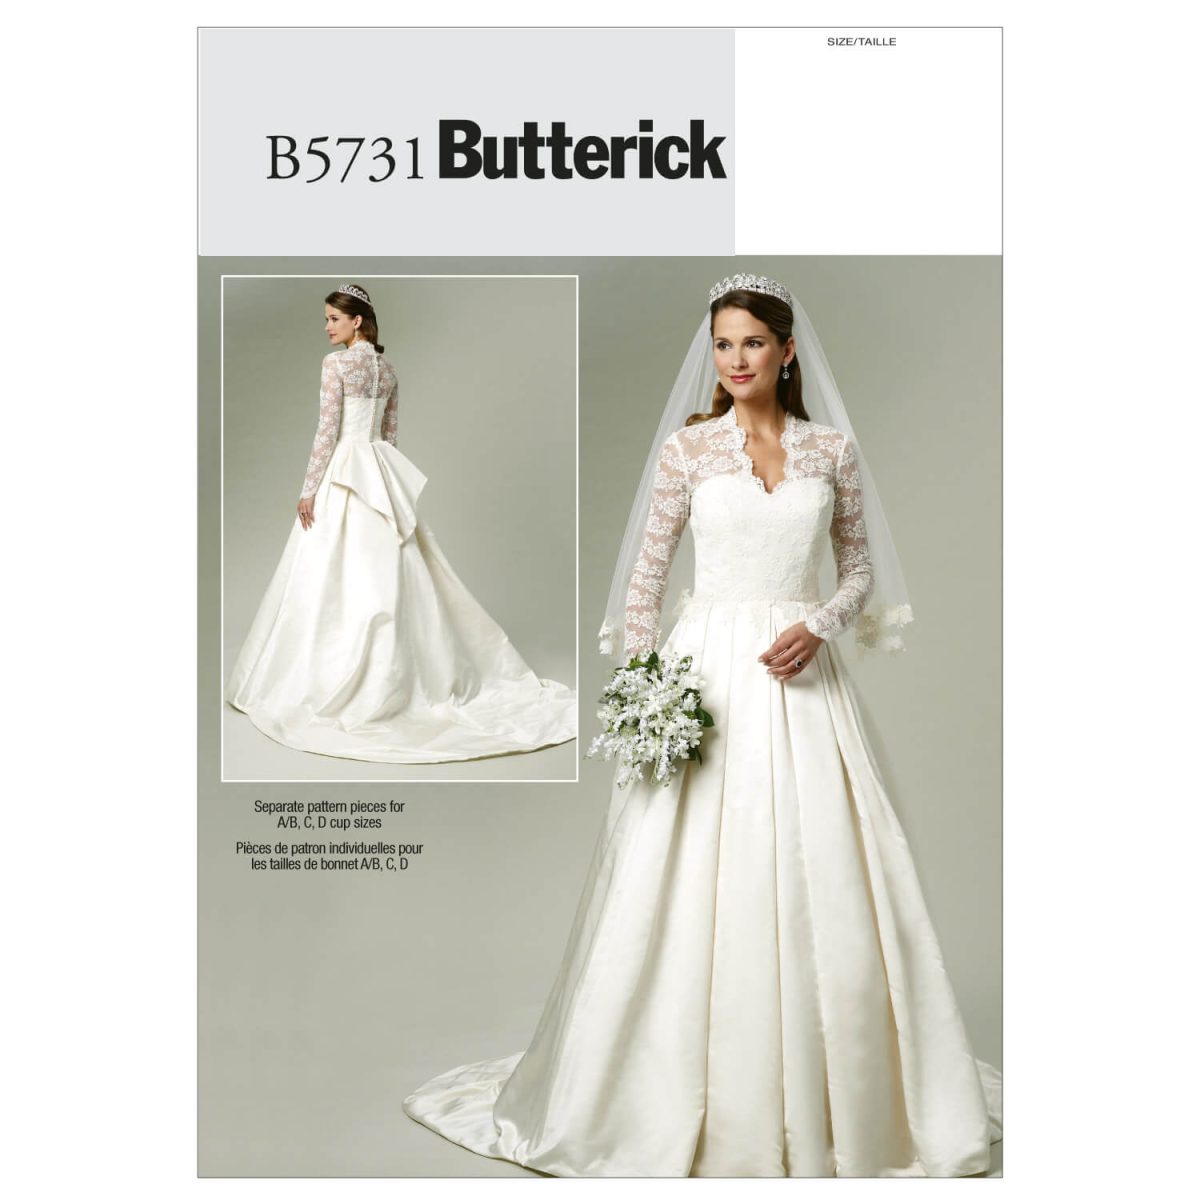 Butterick Sewing Pattern B5731 Misses' Bridal Dress